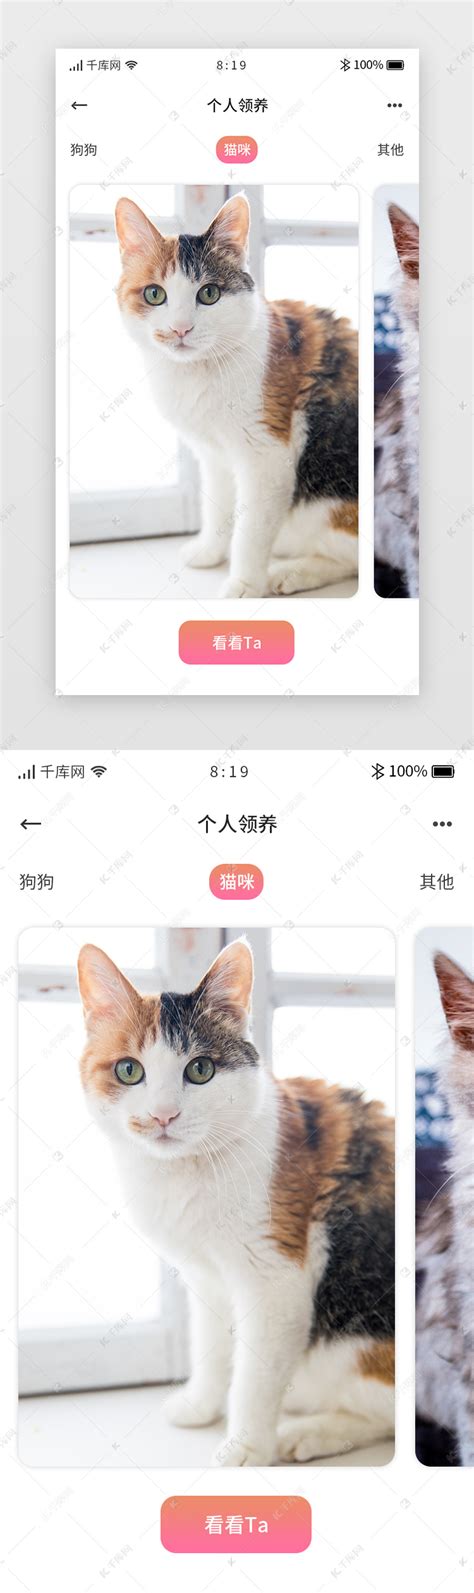 UI设计宠物领养收养类手机APP界面模板素材-正版图片401506888-摄图网